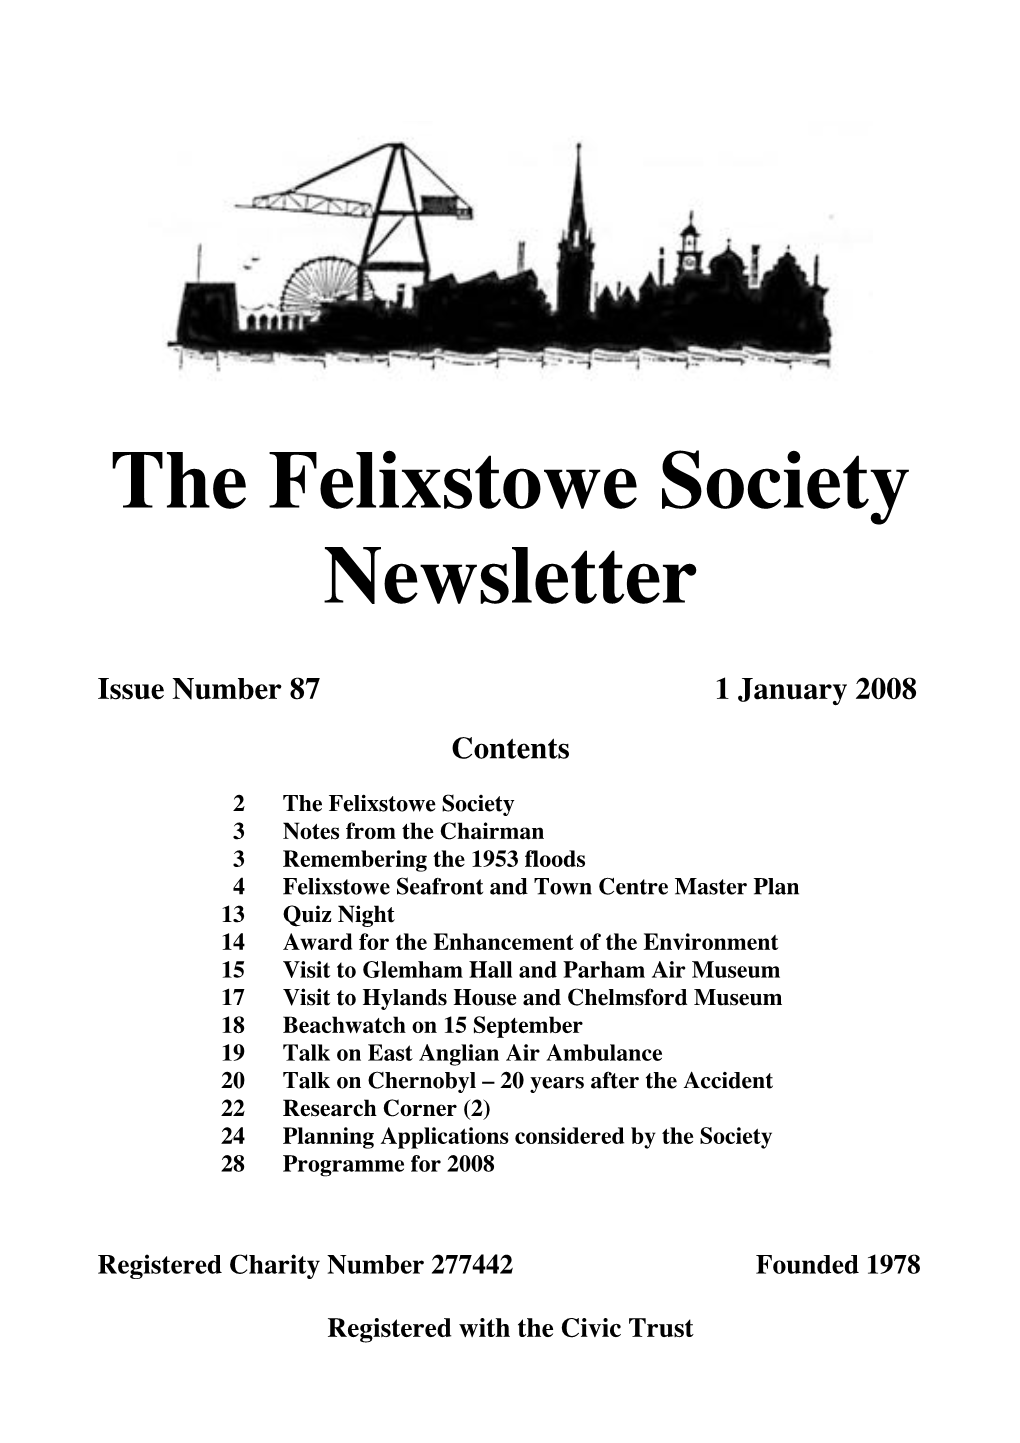 The Felixstowe Society Newsletter